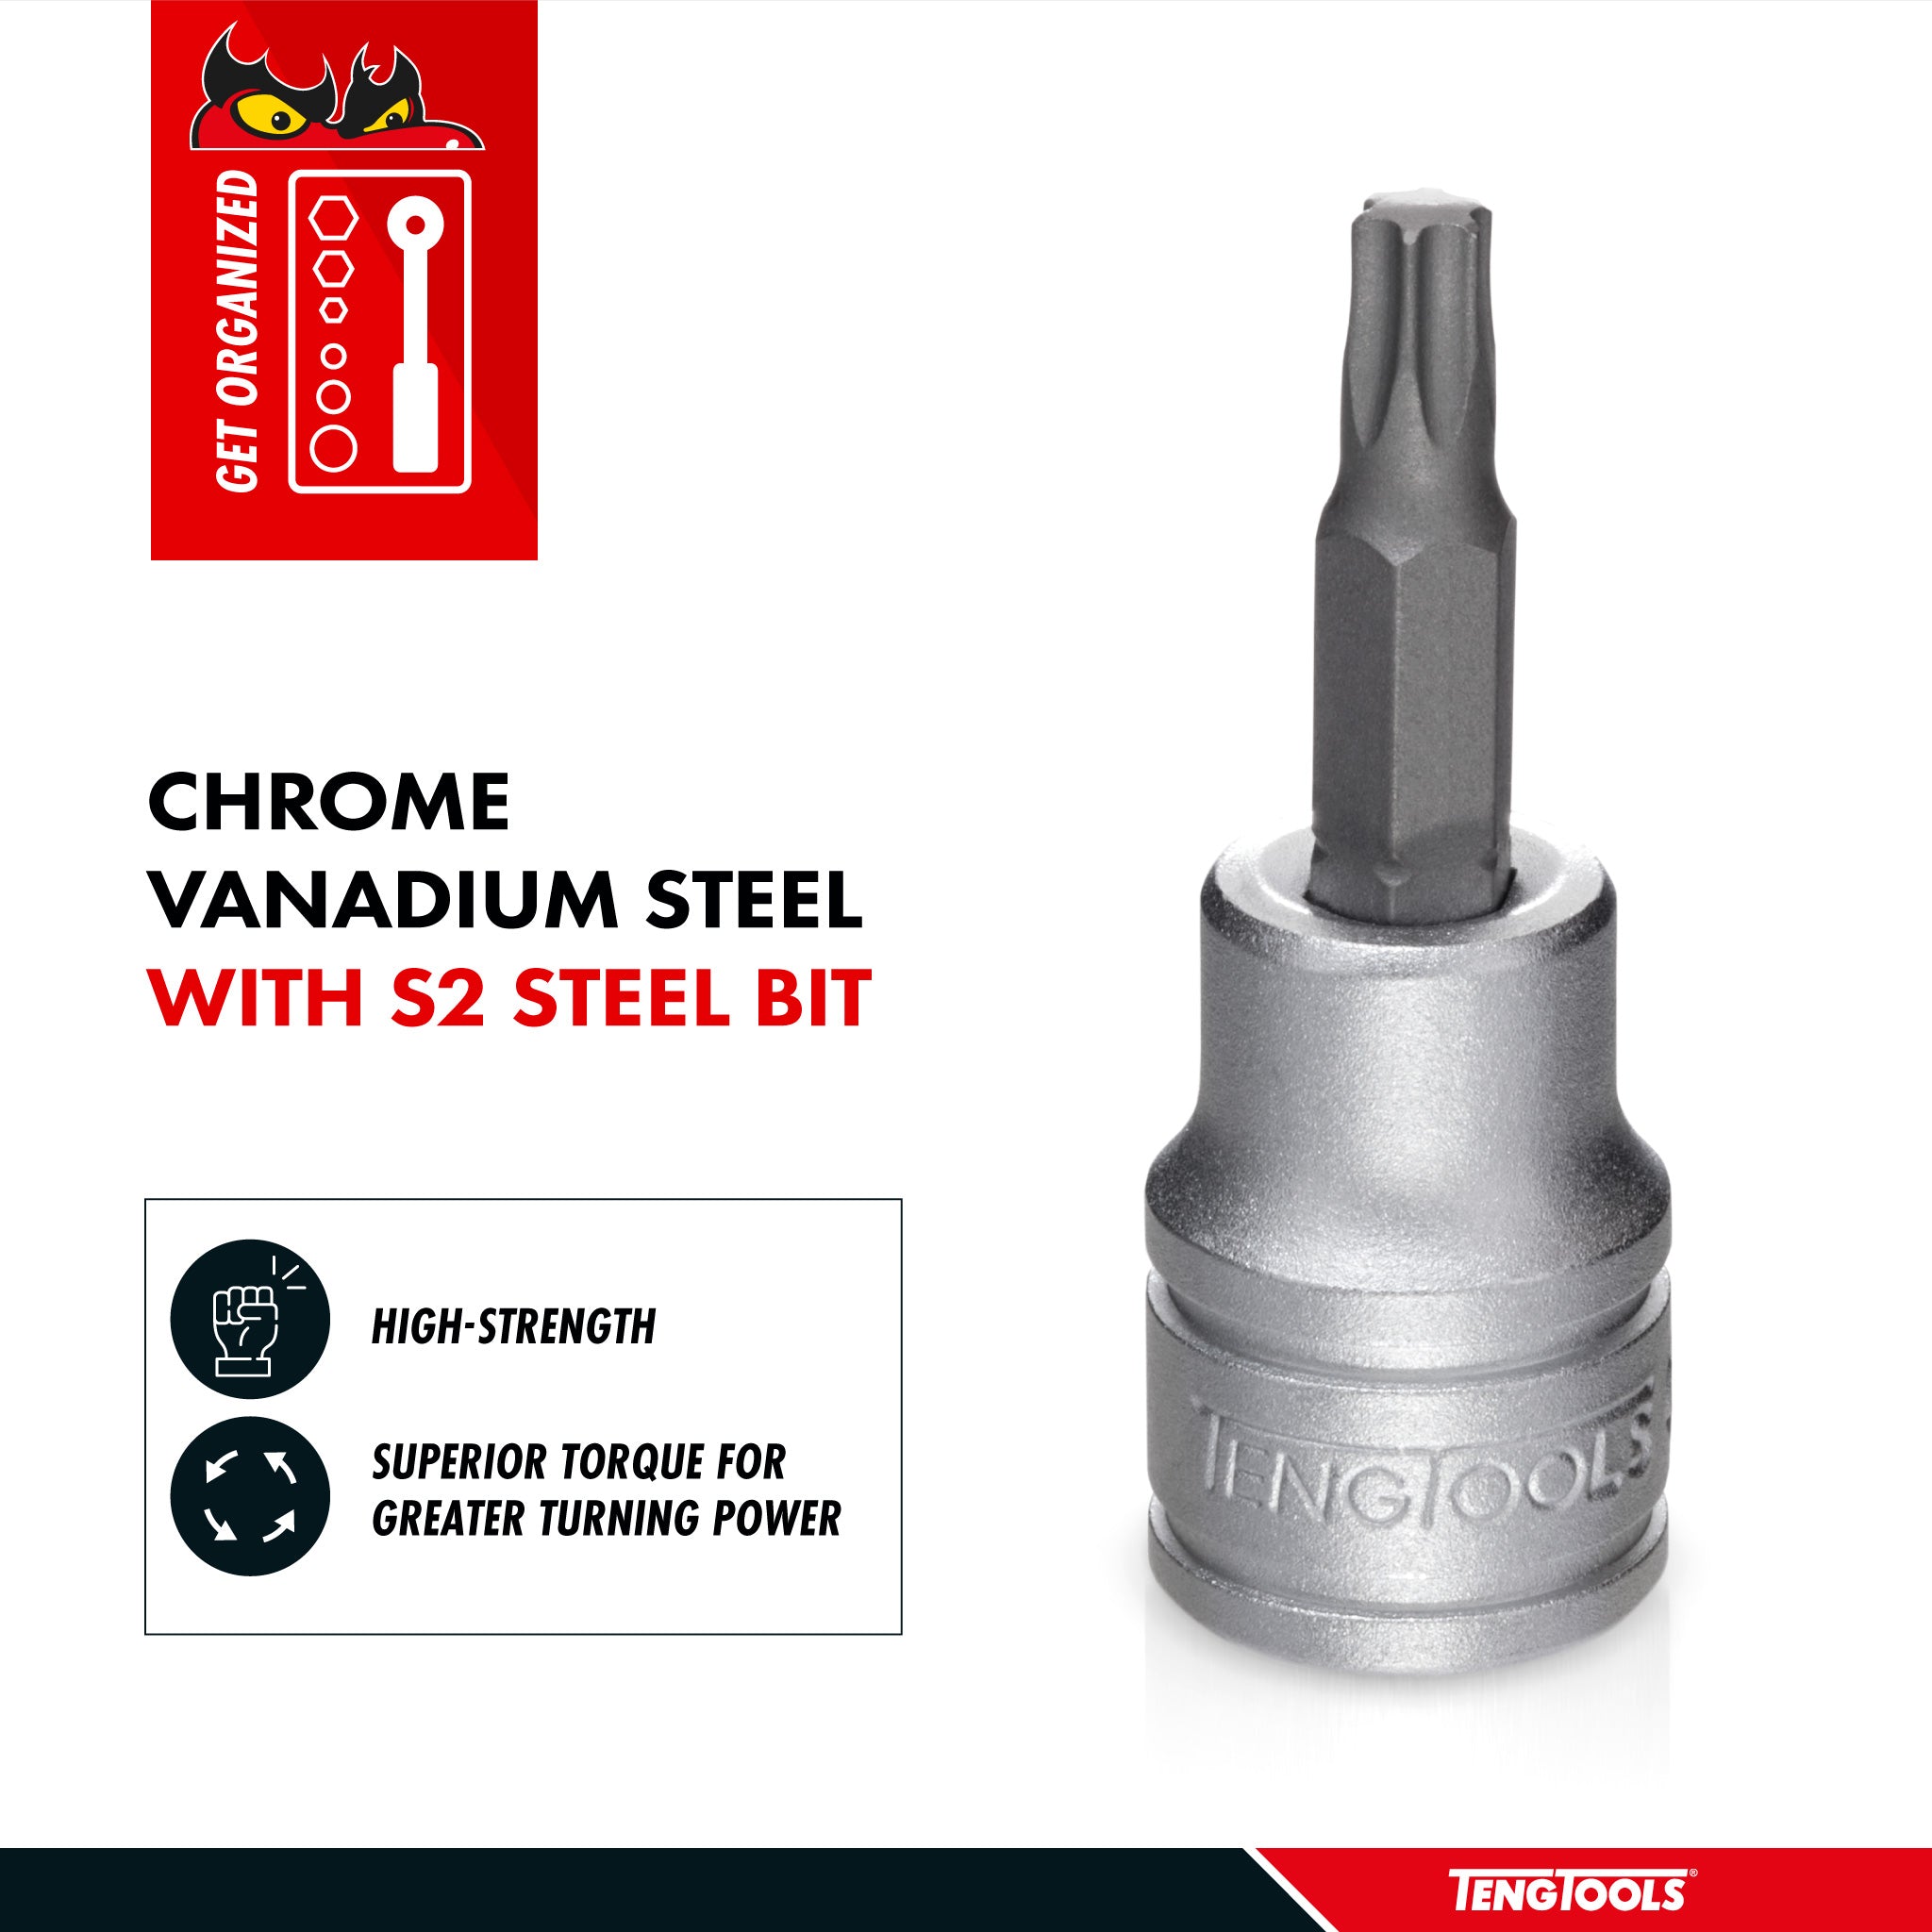 Teng Tools 1/2 Inch Drive Metric Torx TX Chrome Vanadium Sockets - TX40